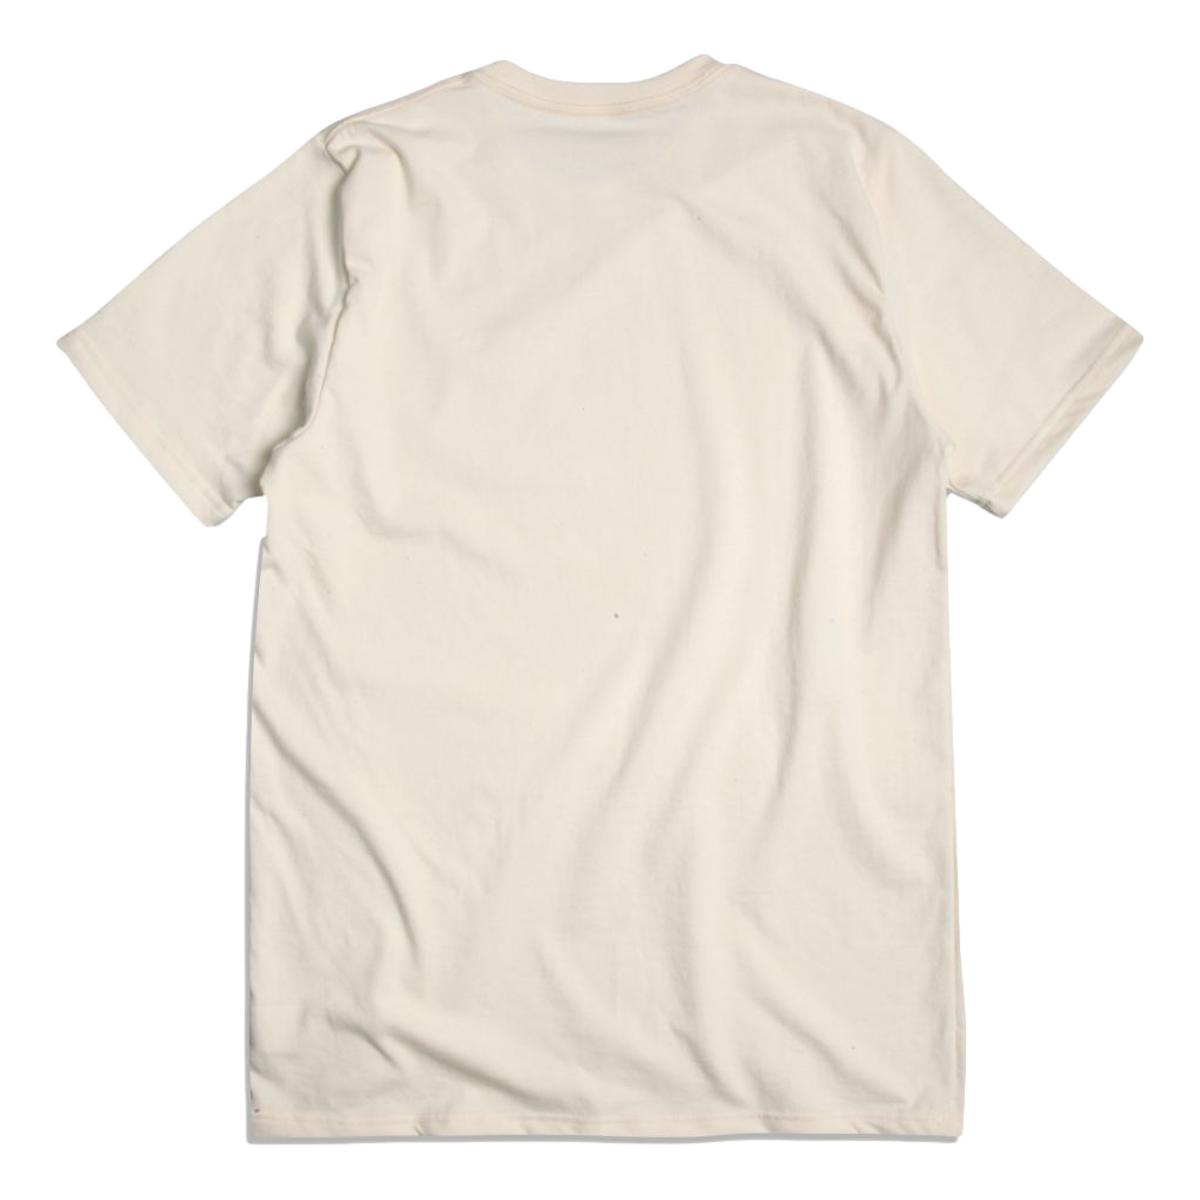 8oz Heavyweight Fieldhouse Tee Natural - T Shirts